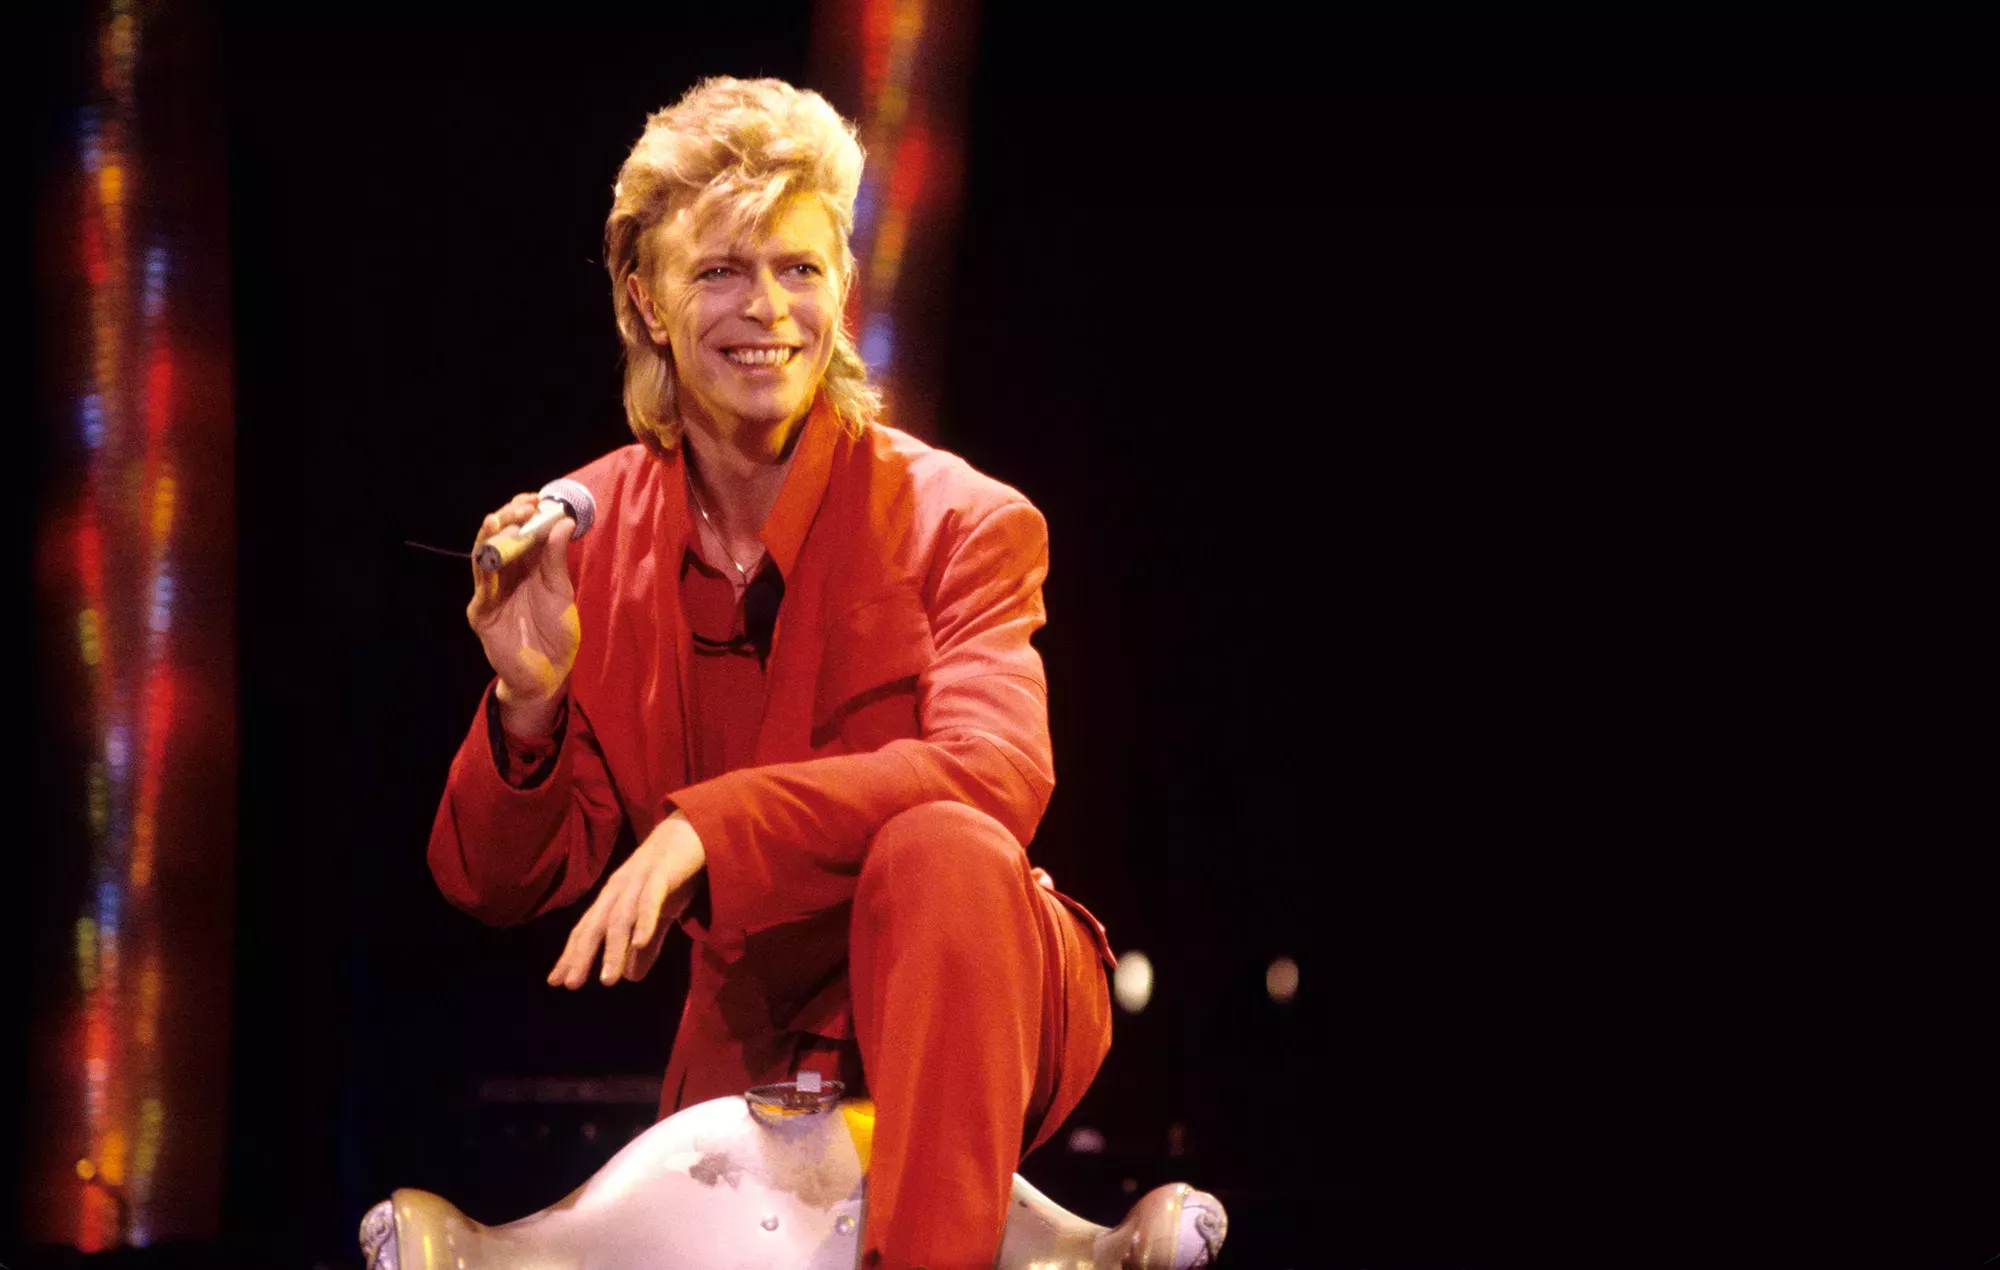 El director del biopic de Kurt Cobain prepara una película sobre David Bowie